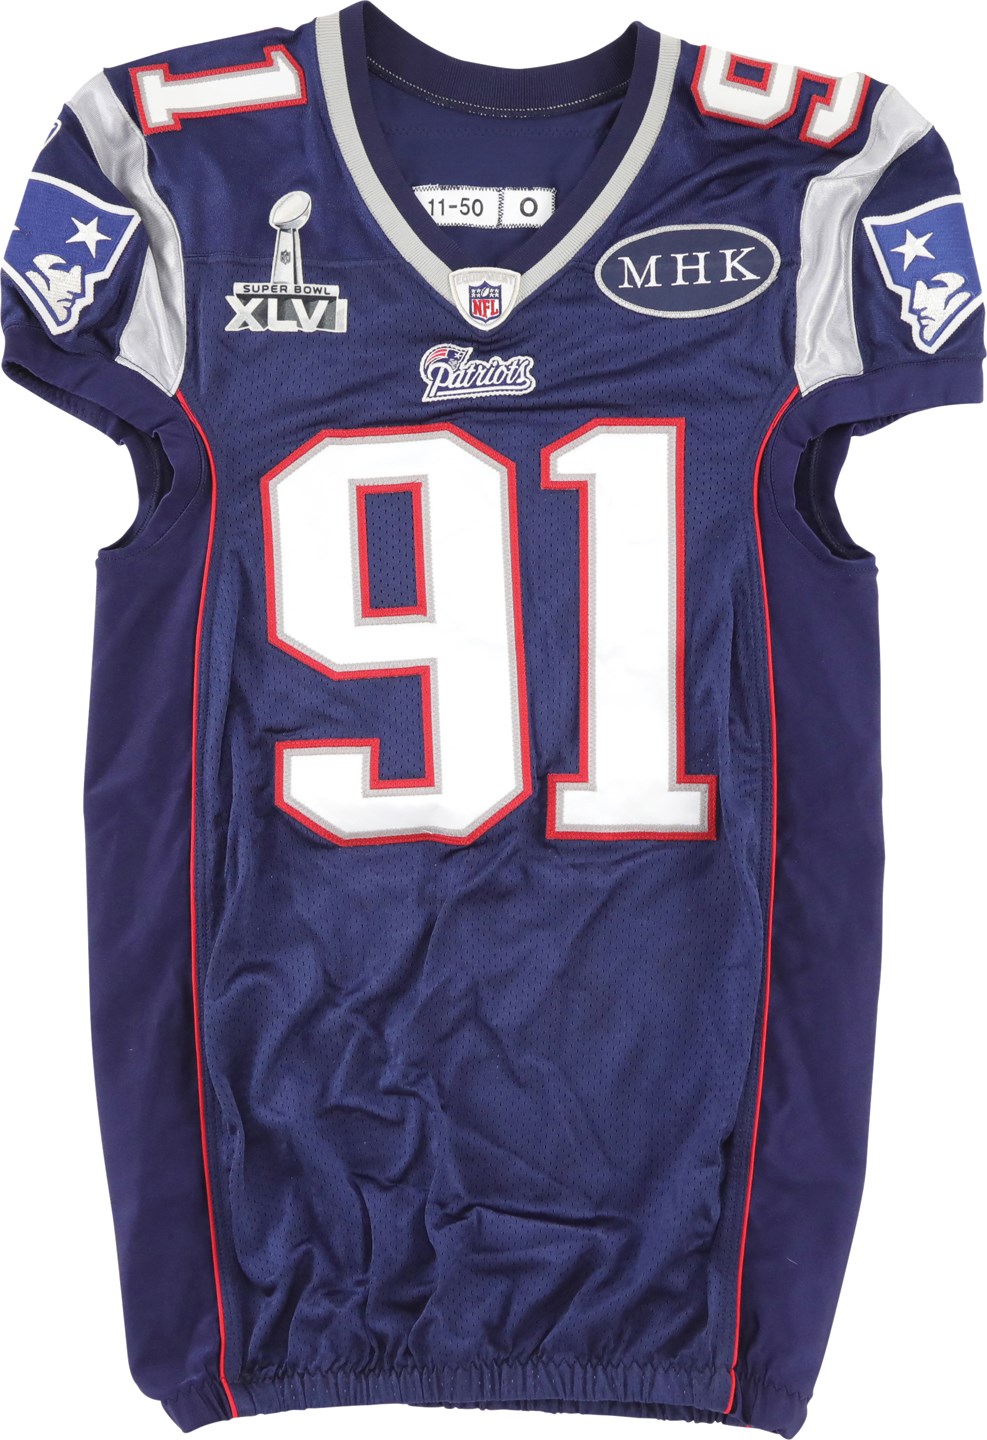 - 2011 Myron Pryor Super Bowl XLVI New England Patriots Photoshoot Worn Jersey (Sources Directly from Pryor)